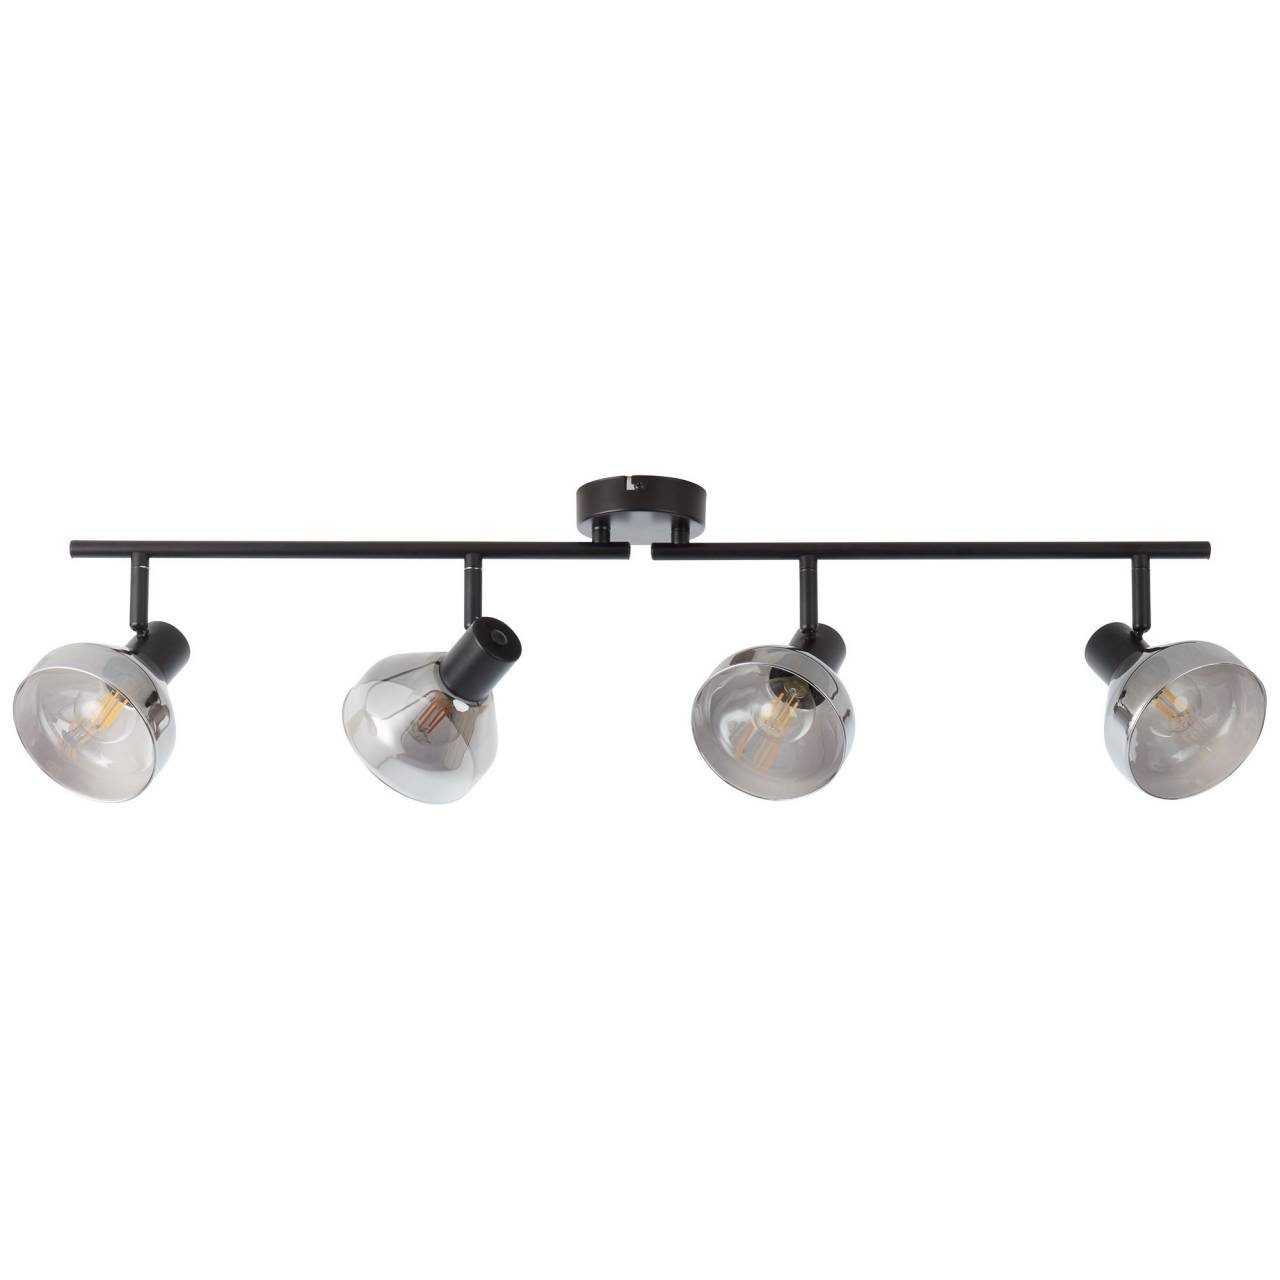 Brilliant Deckenleuchte Reflekt, Lampe Reflekt 18W E14, 4flg D45, 4x schwarzmatt/rauchglas Spotrohr